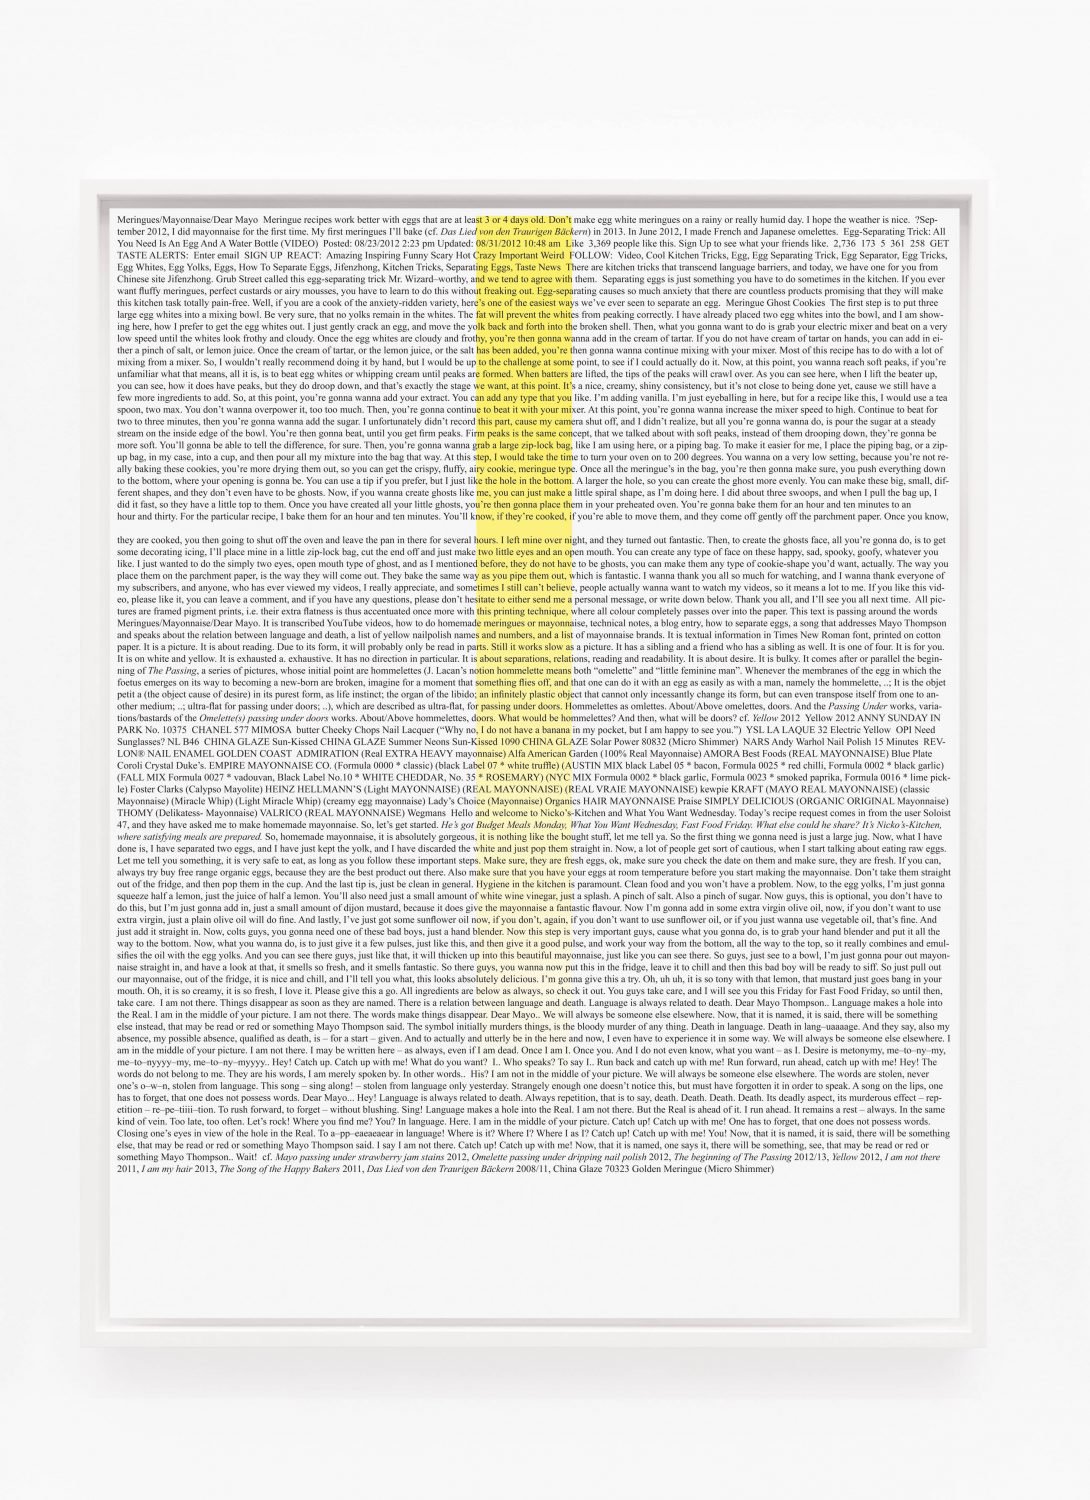 Lisa HolzerMeringues/Mayonnaise/Dear Mayo, 2013Pigment print on cotton paper88 x 68 cm